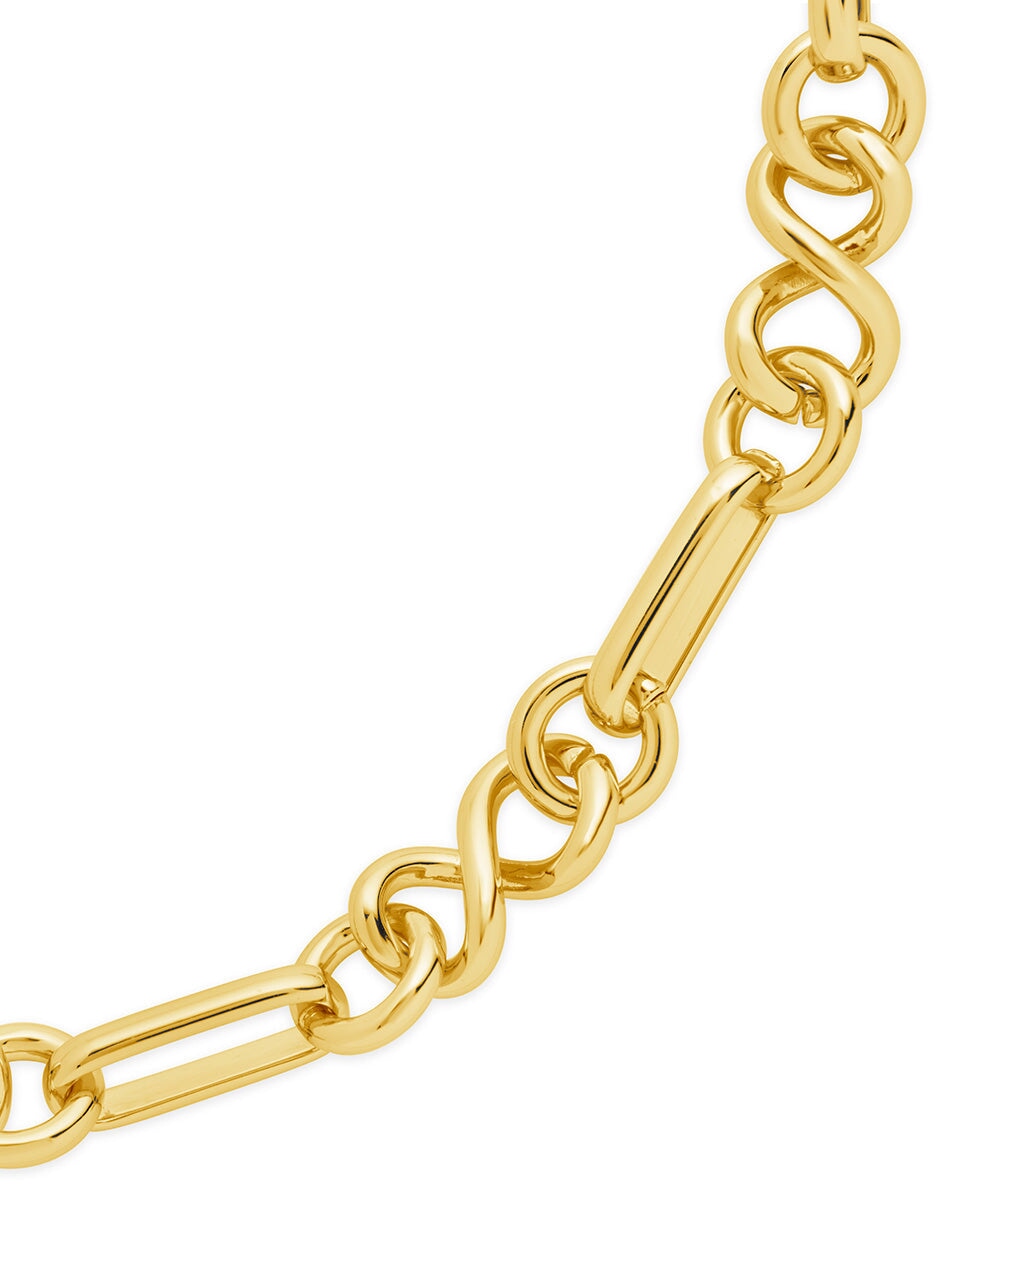 Infinity & Oval Link Chain Bracelet Bracelet Sterling Forever 